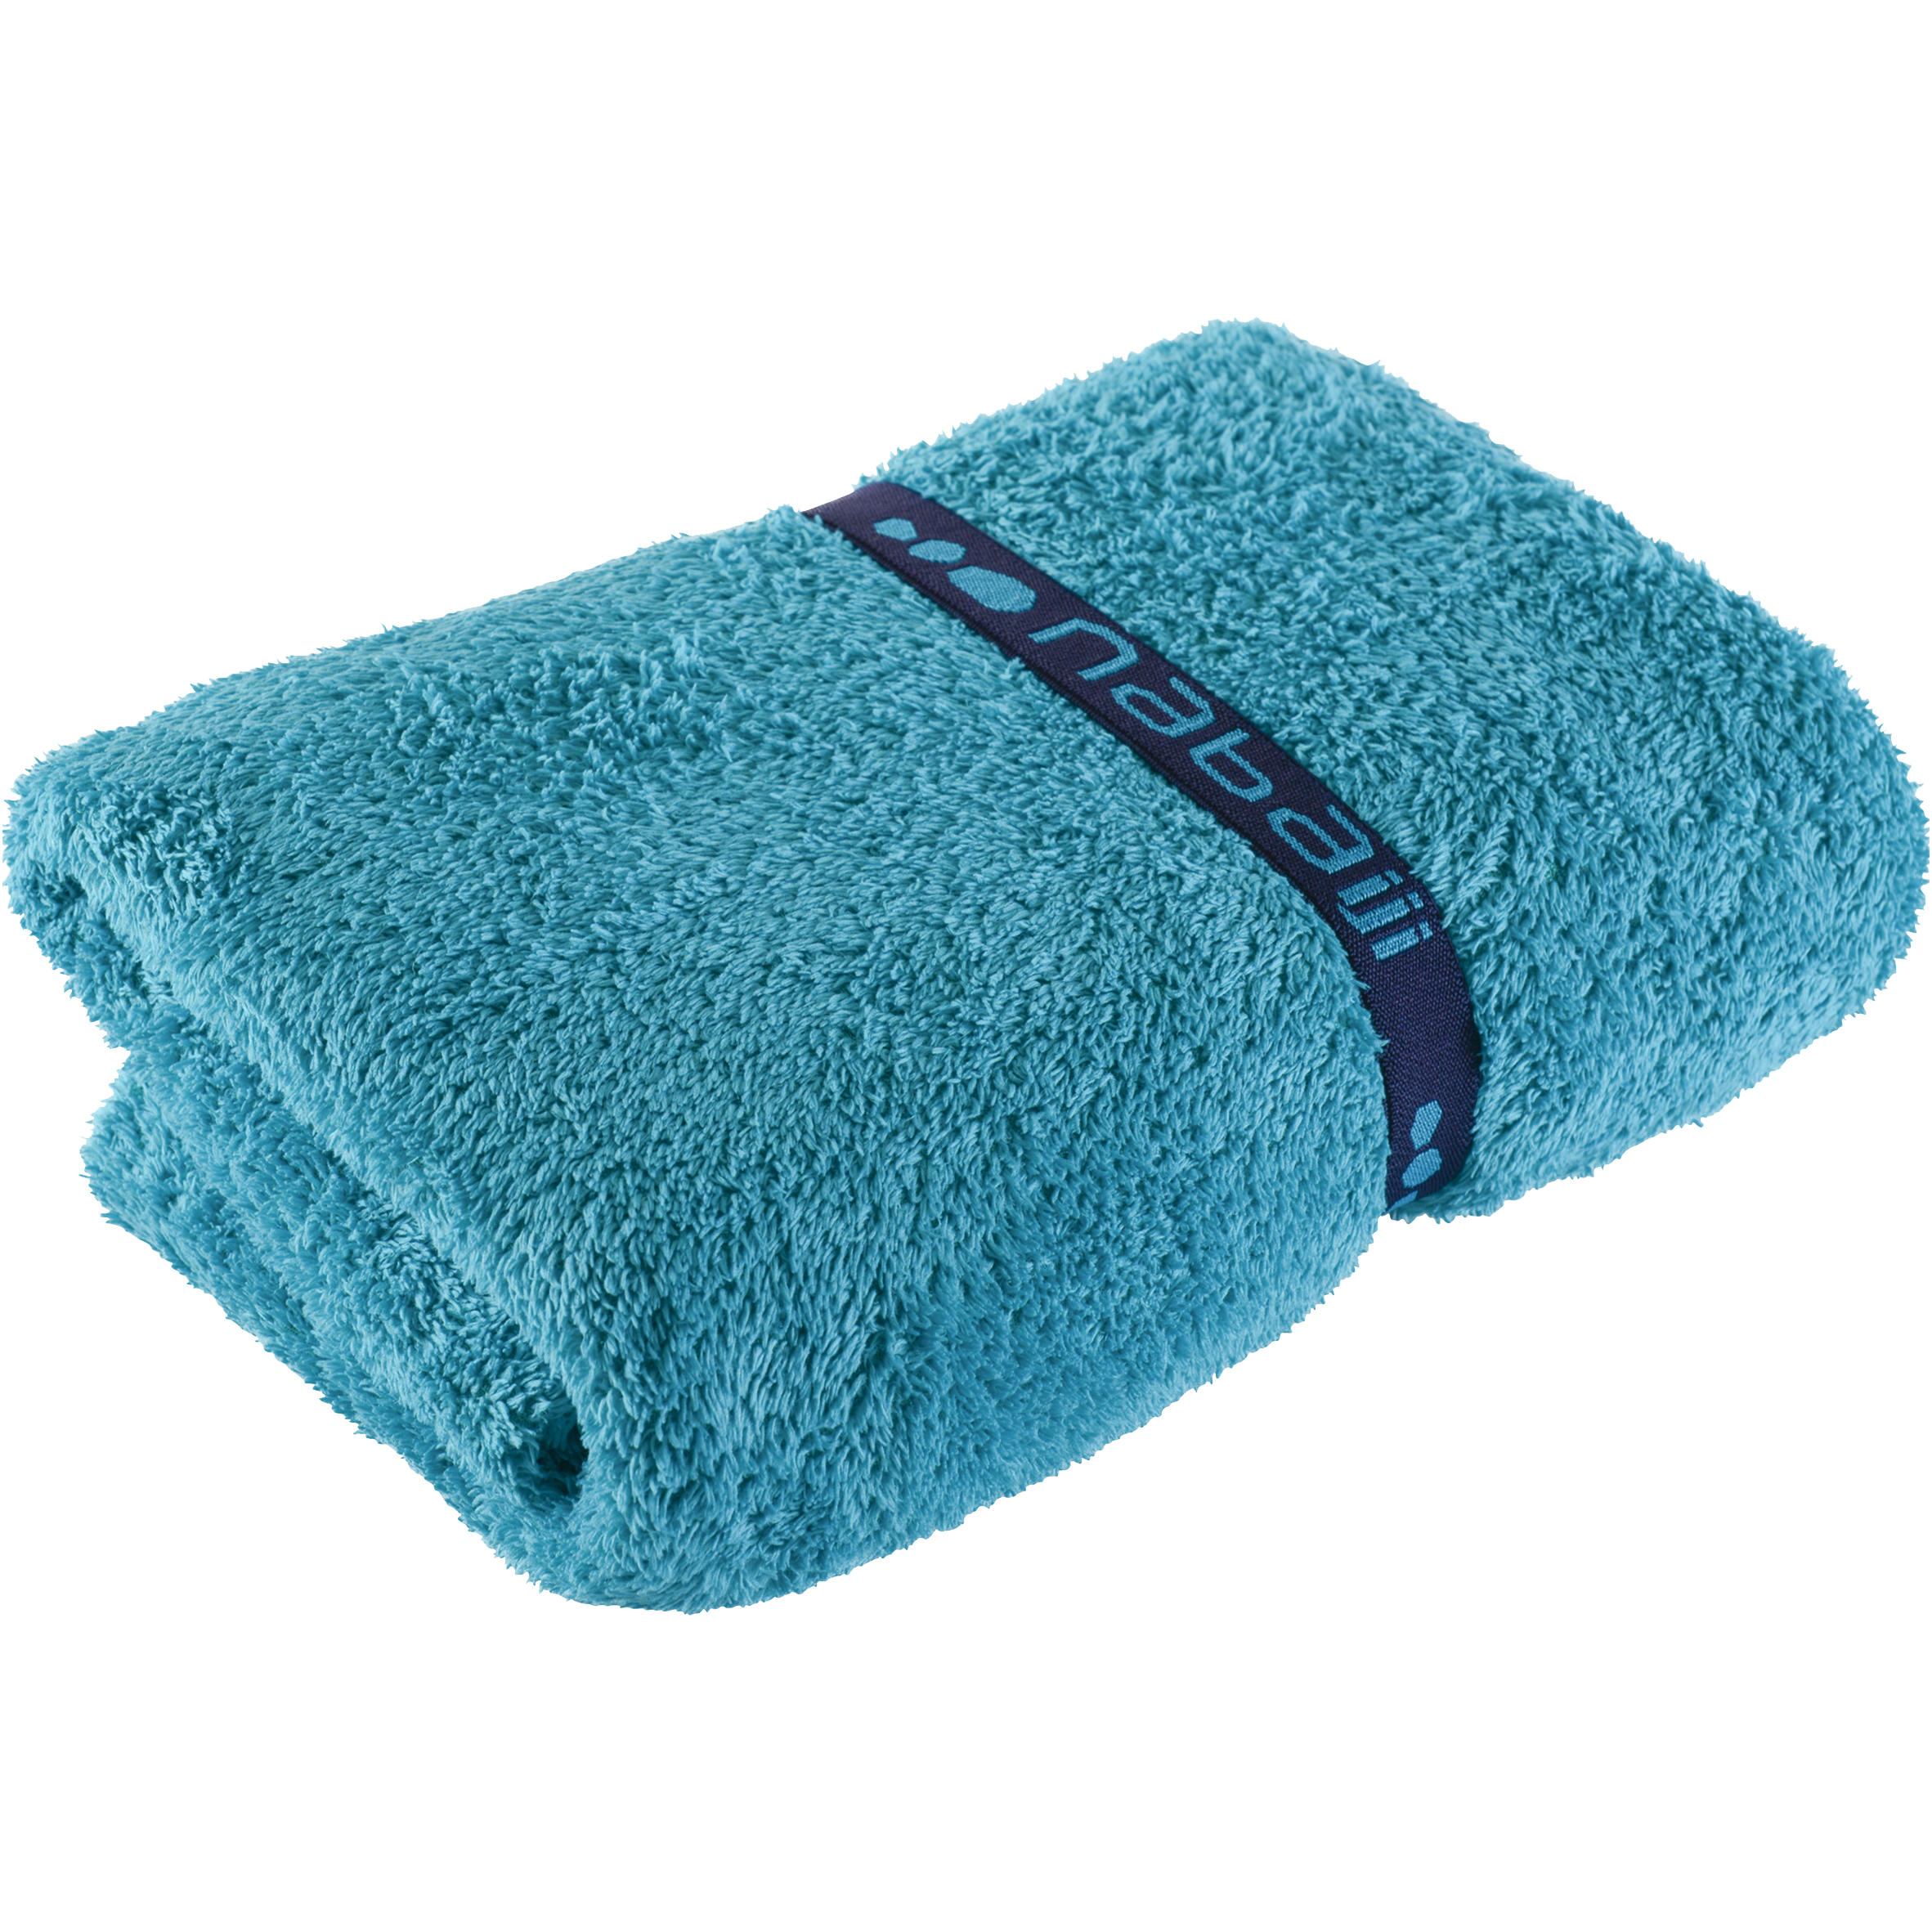 decathlon towels